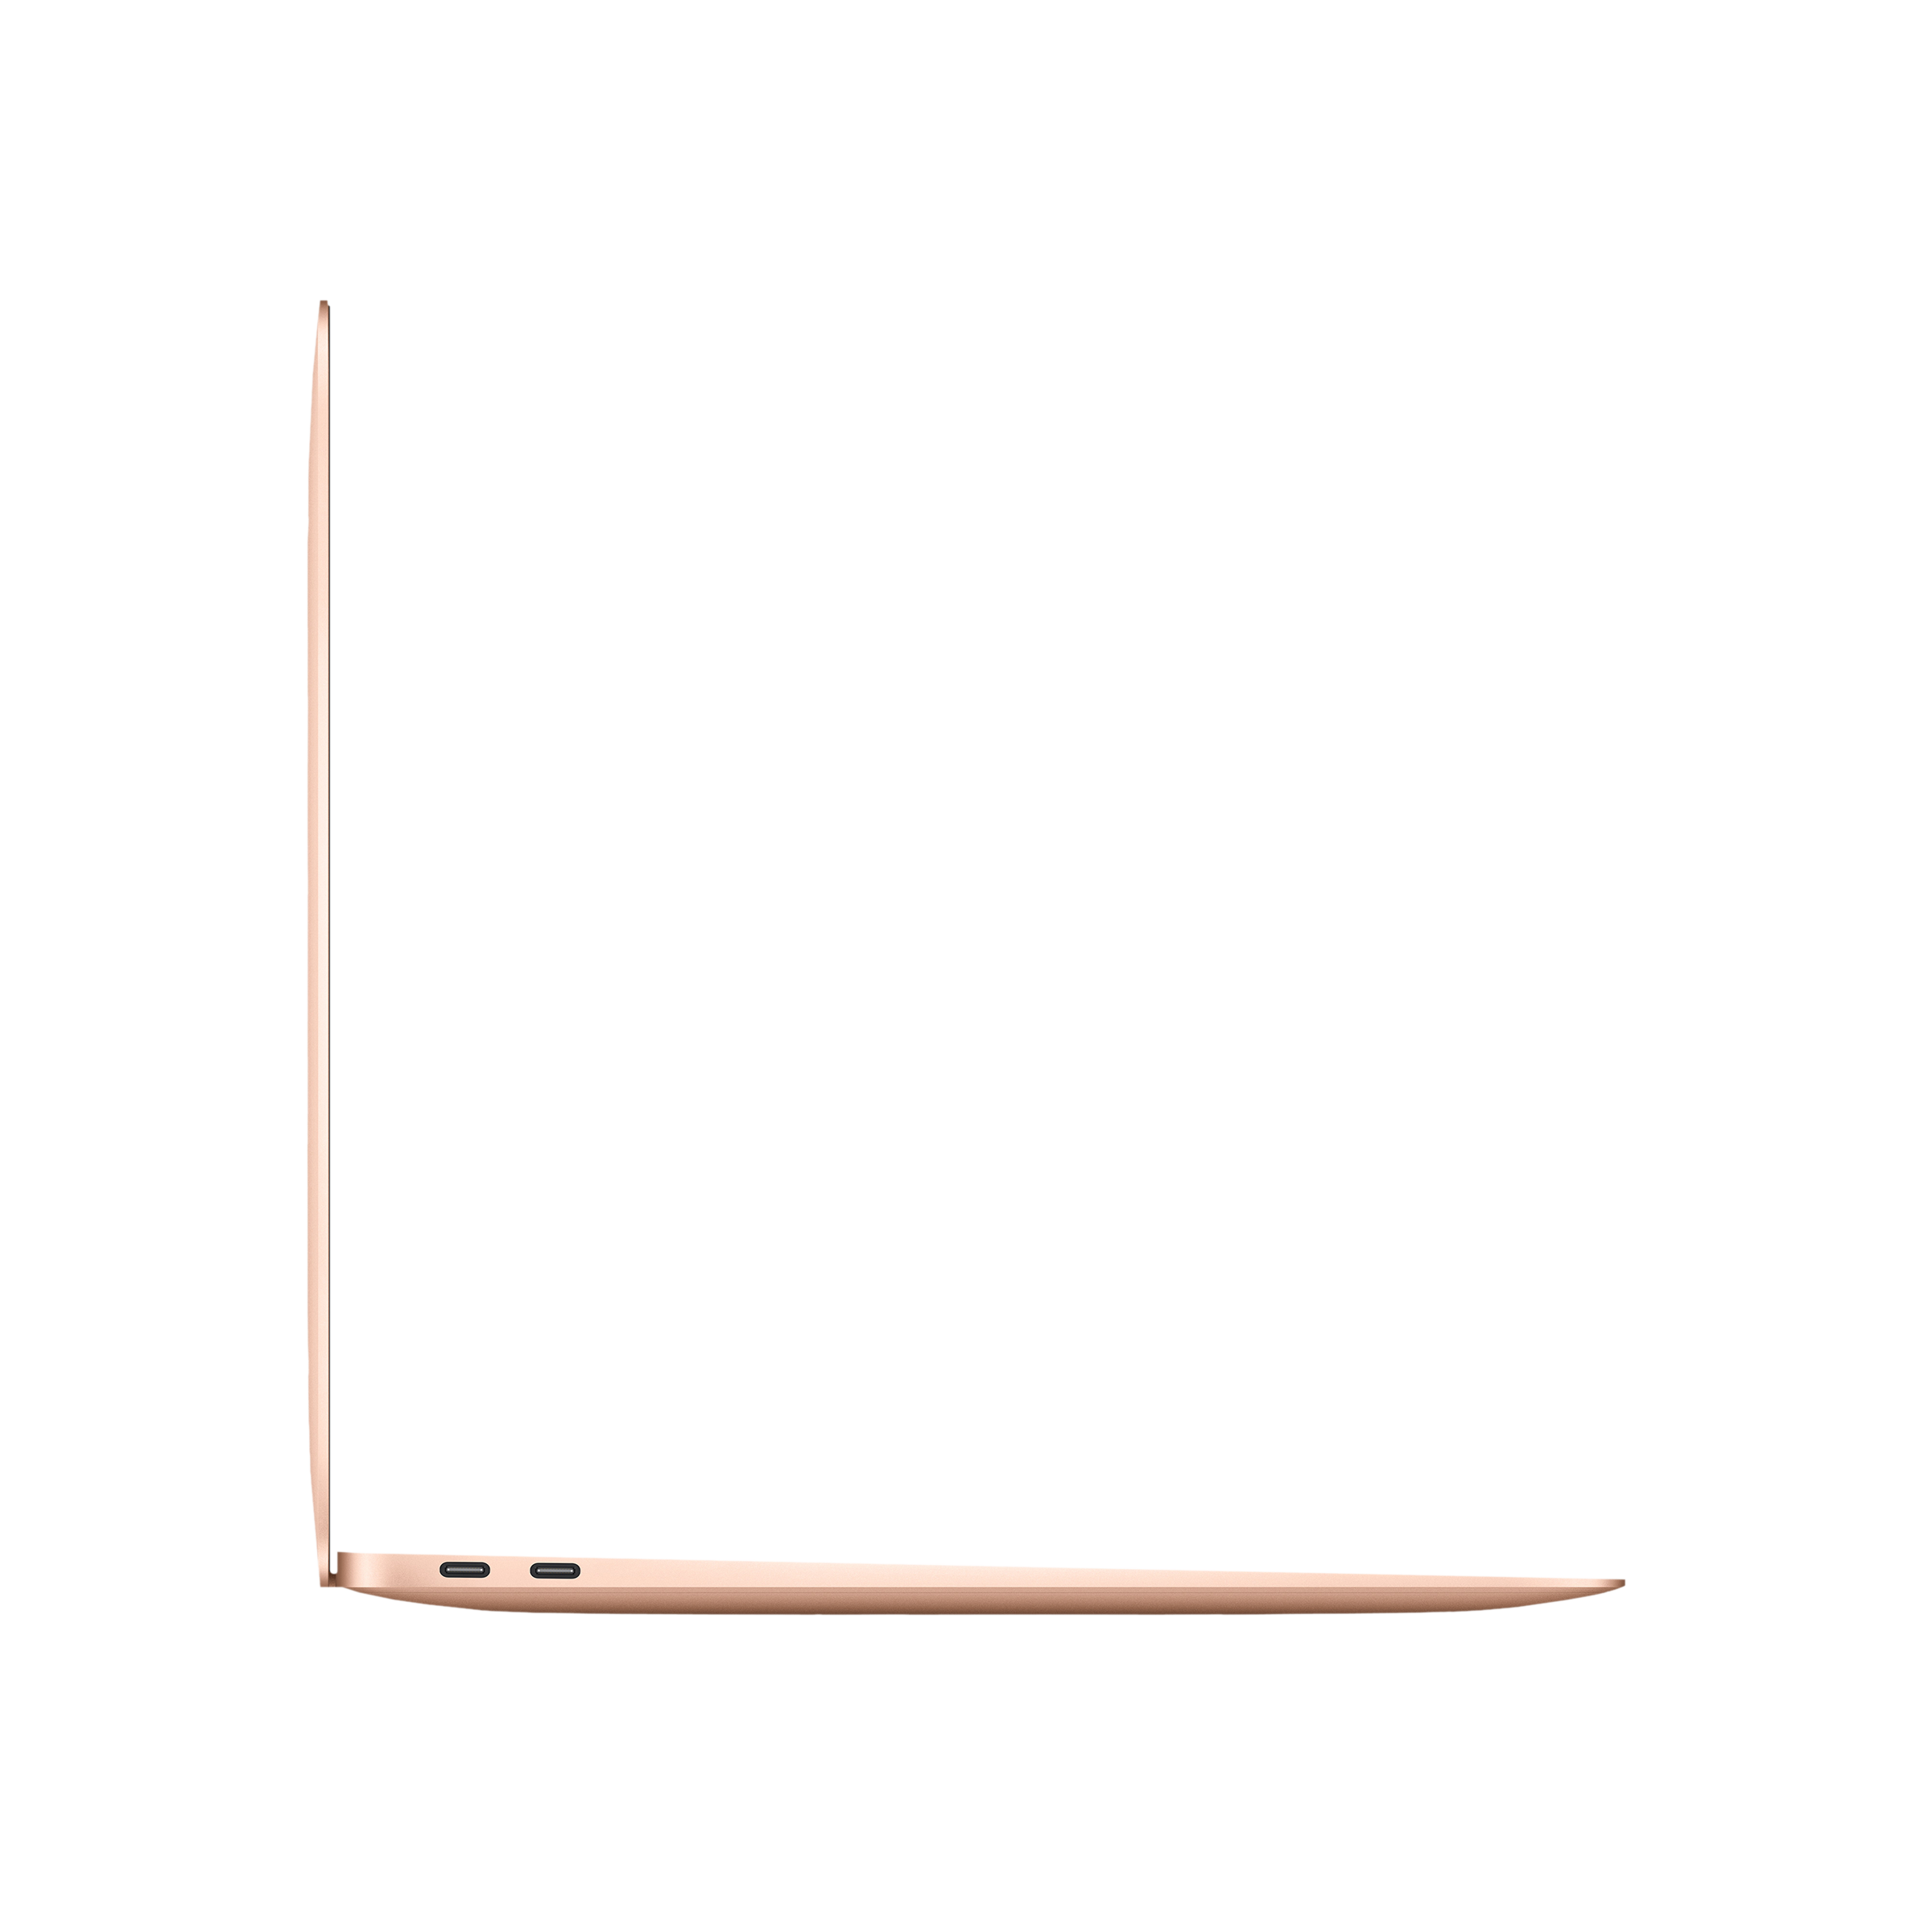 Buy Apple MacBook Air 2020 (13.3 Inch, M1, 8GB, 256GB, macOS Big 